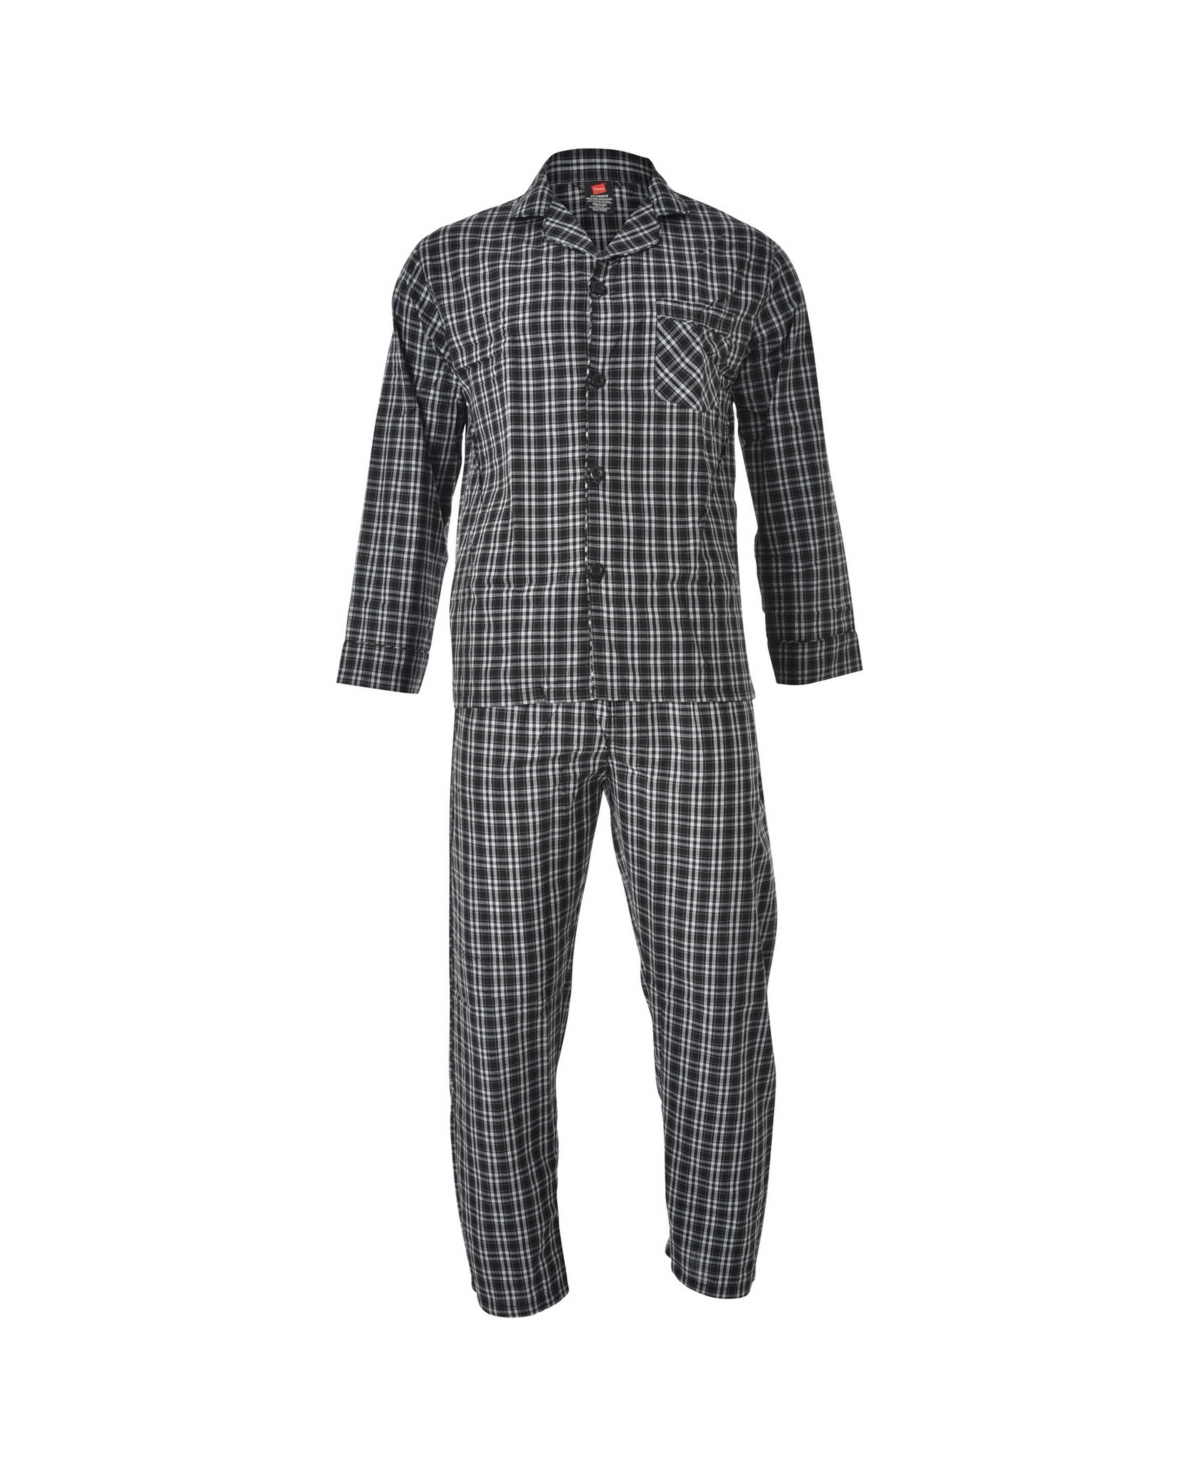 Hanes Platinum Hanes Men's Big and Tall Cvc Broadcloth Pajama Set